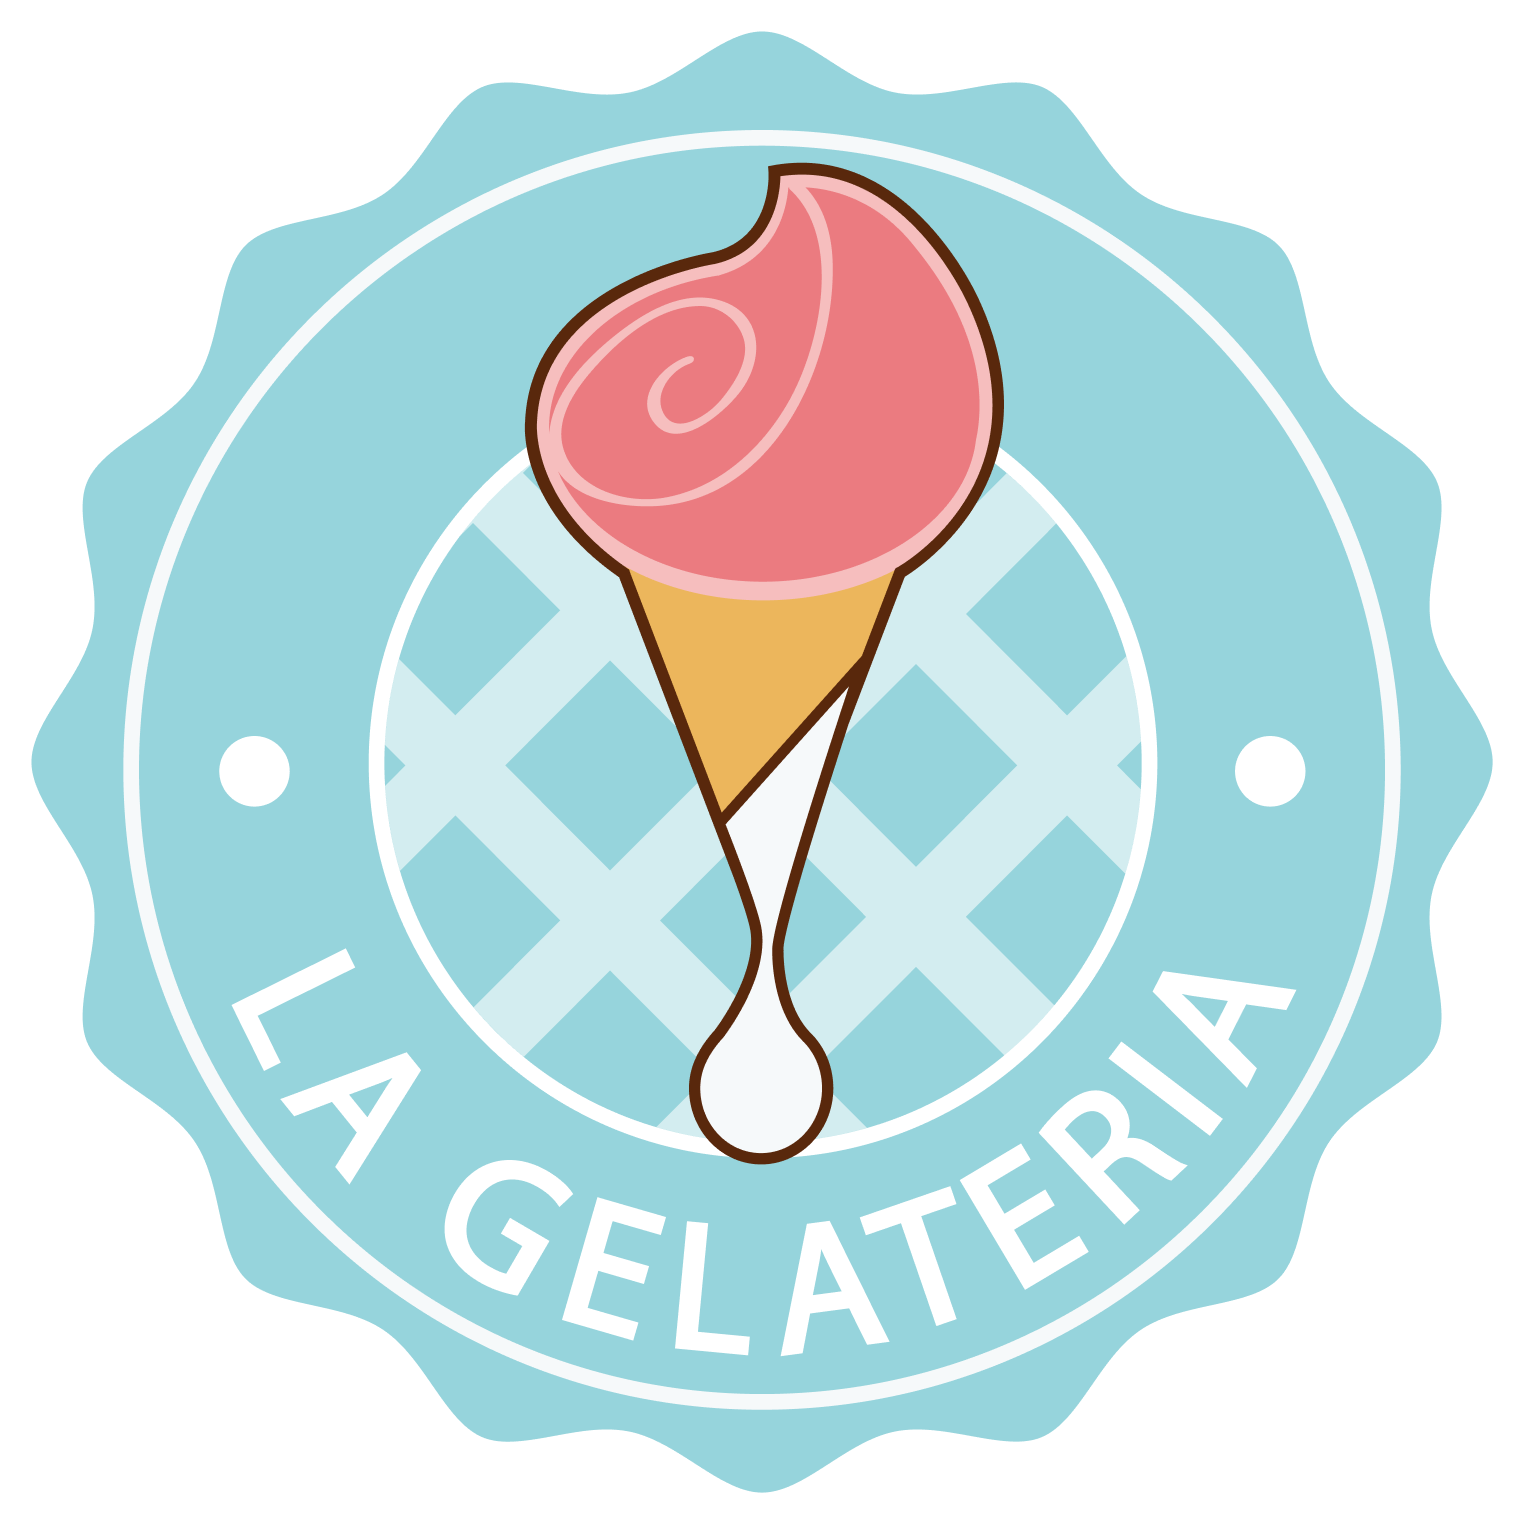 About us - La gelateria